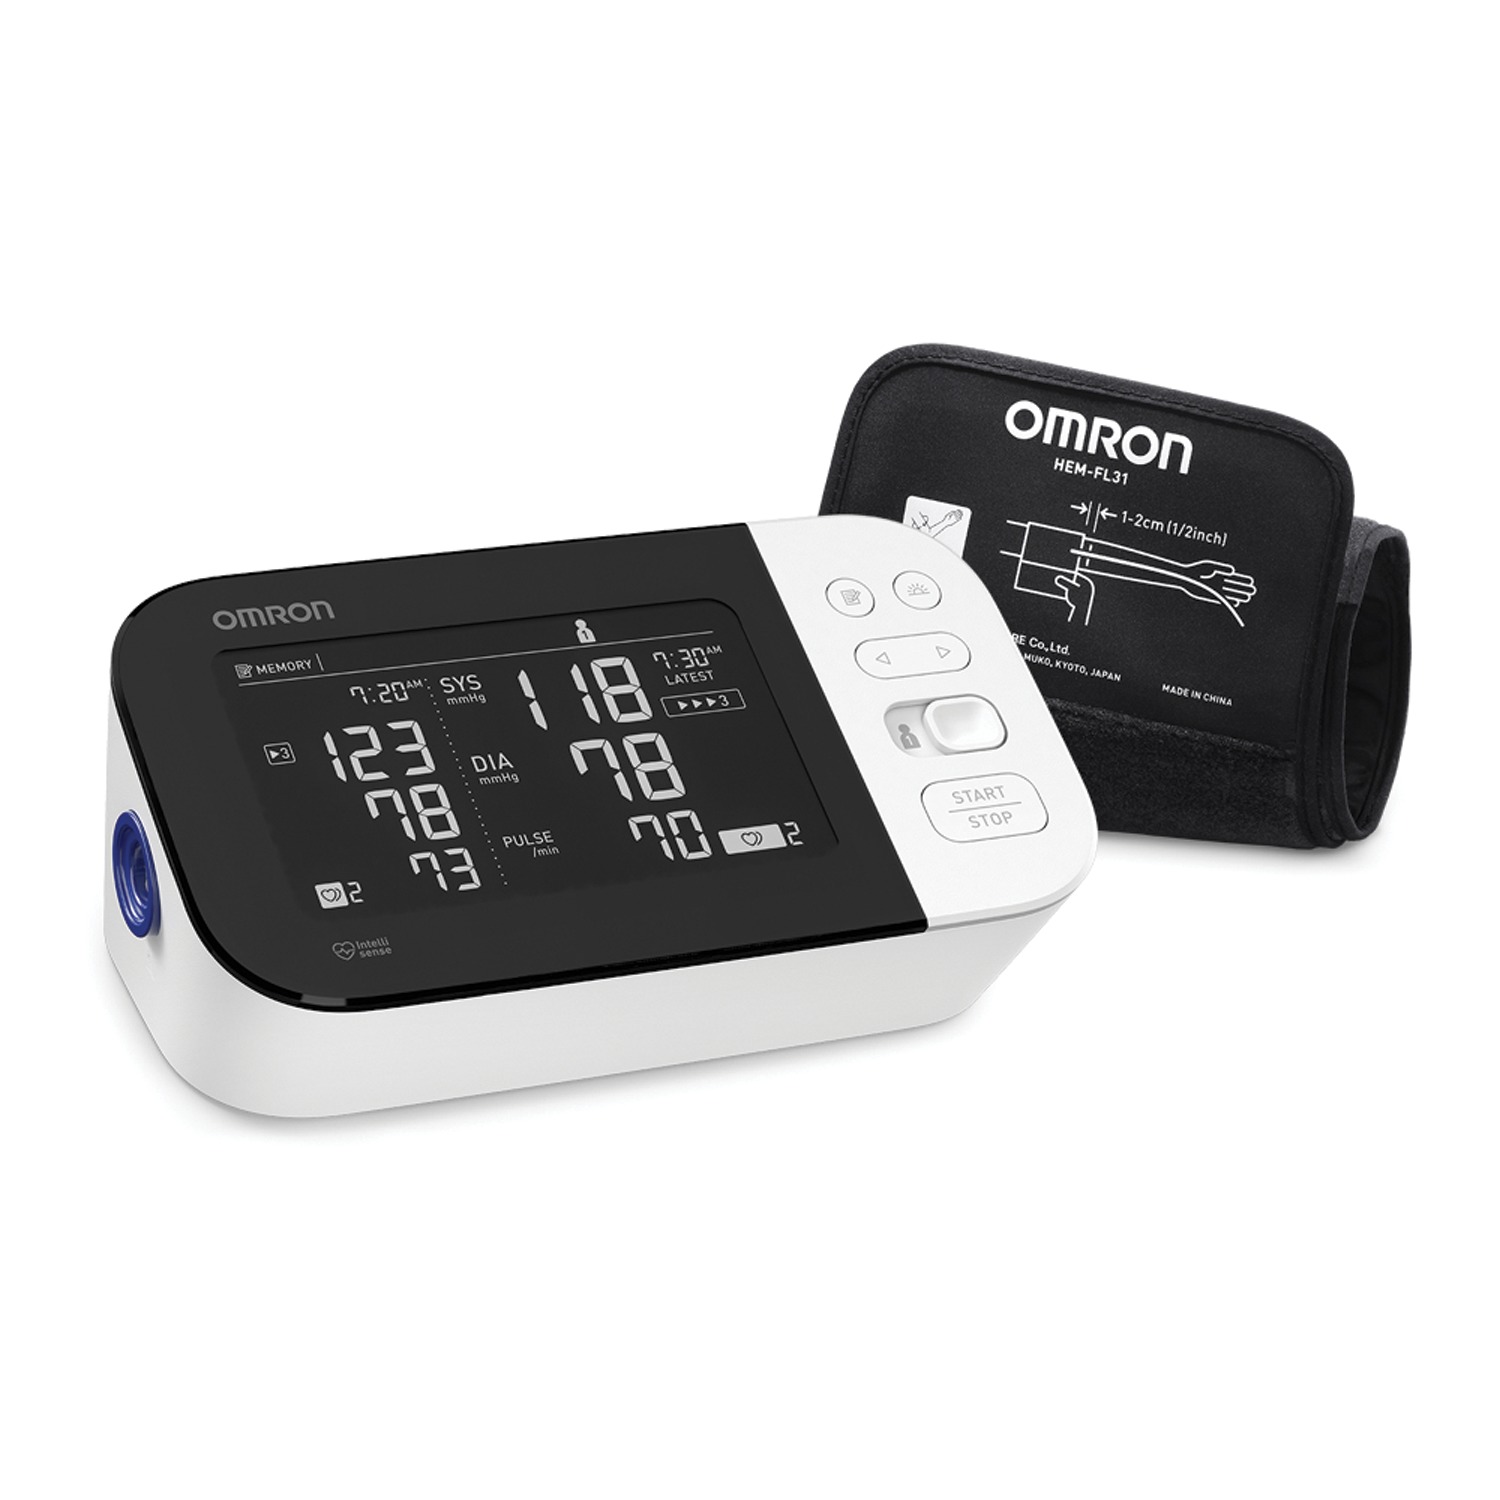 Smart Blood Pressure Monitors